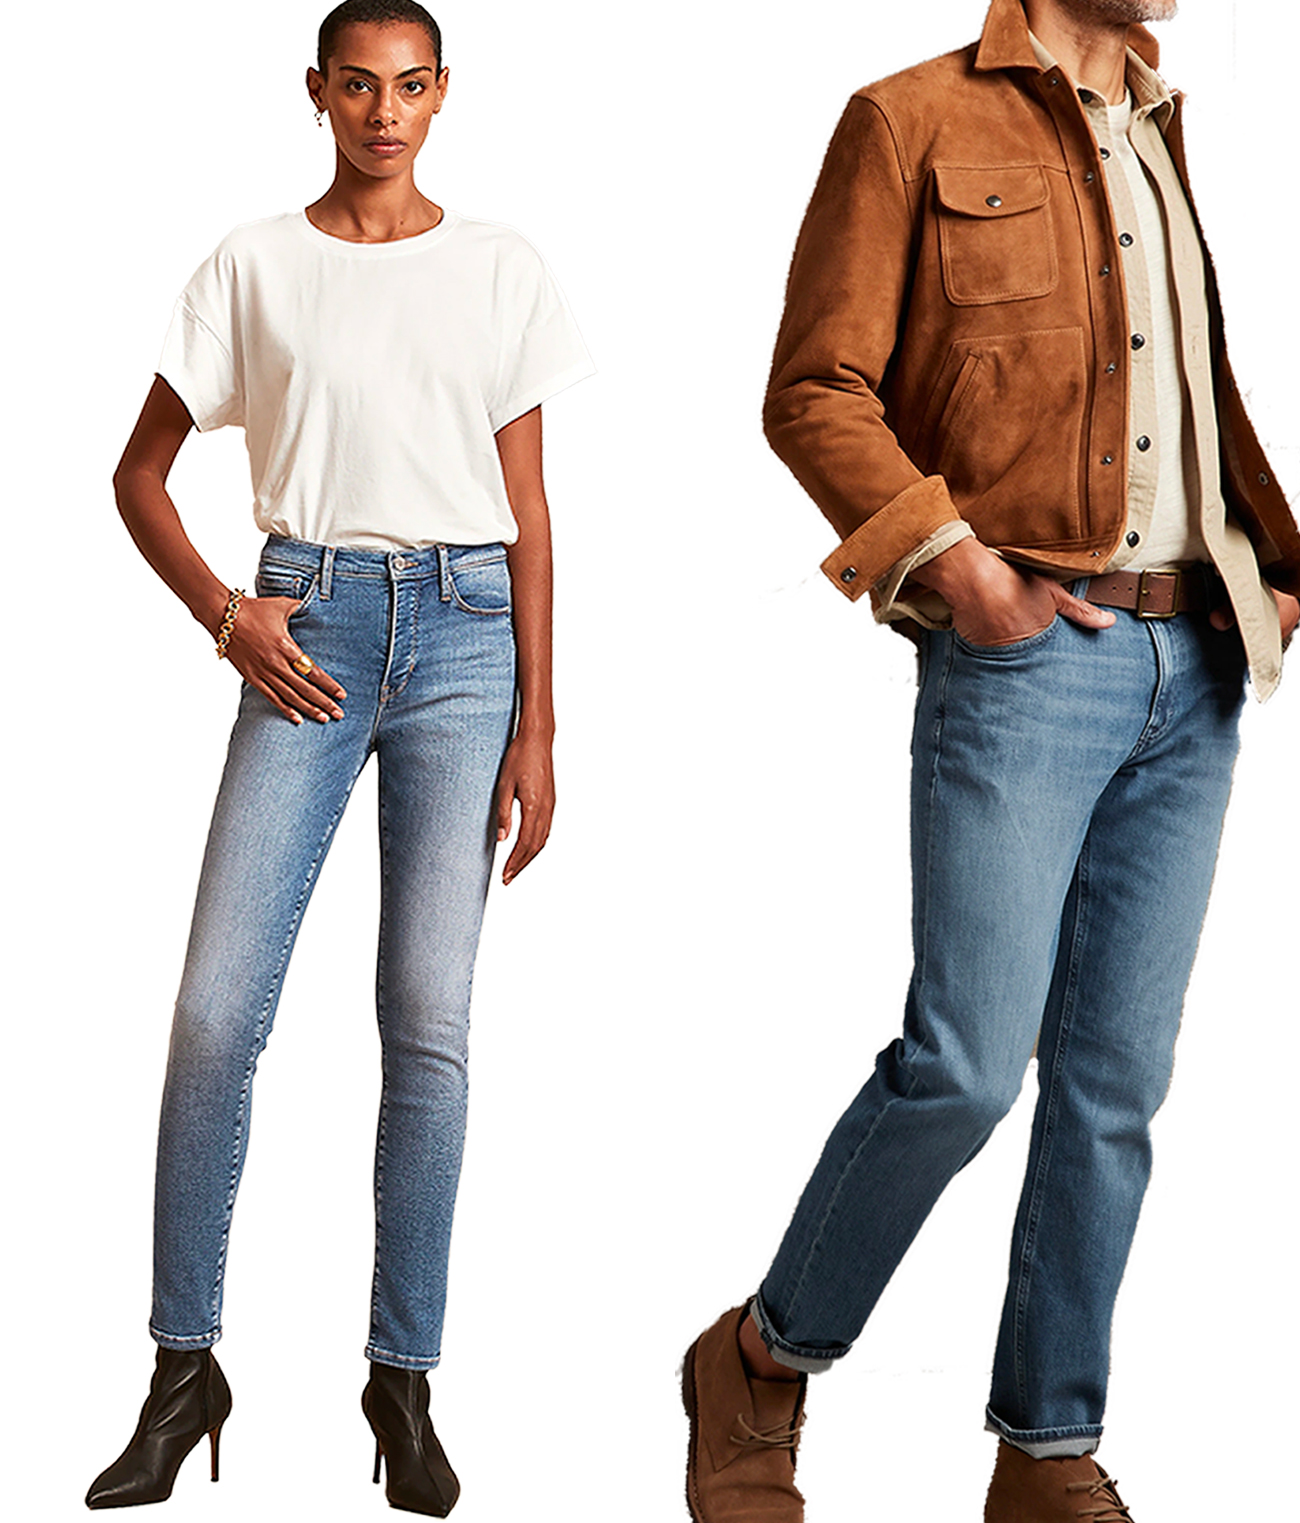 Banana Republic: Women's High + Skinny Super Stretch Jeans $13.60 | Men's Organic Jeans $22.10, Cotton-Linen Dockside Pants $25.50 + FS from $42.50+